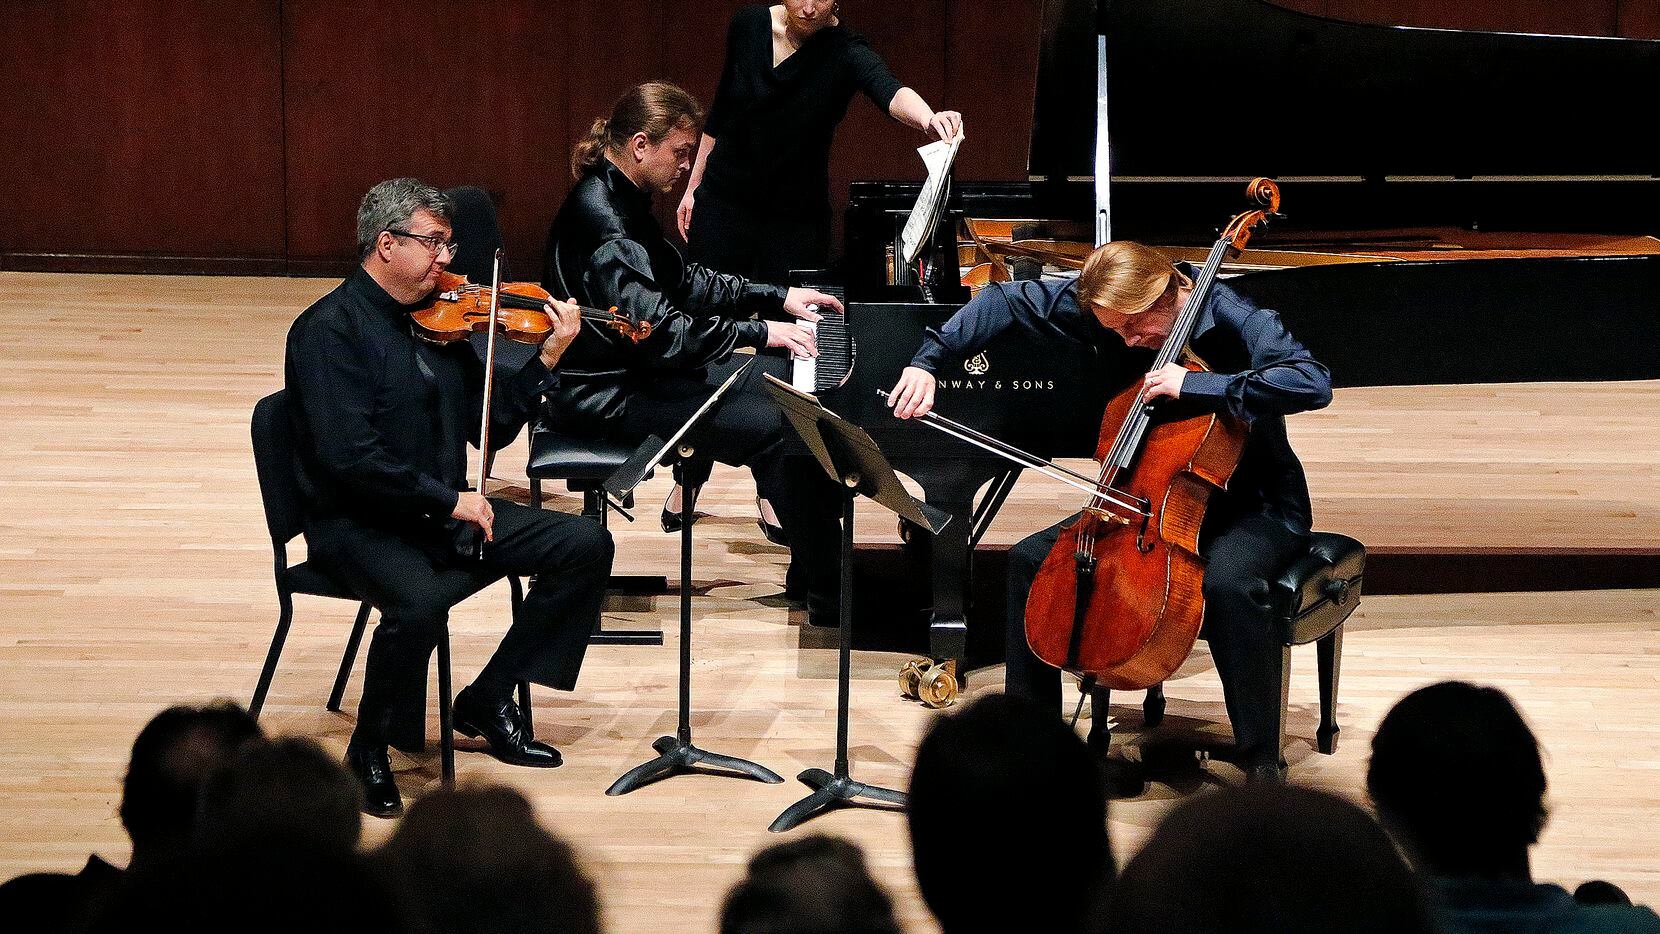 The Hermitage Piano Trio -- violinist Misha Keylin, cellist Sergey Antonov and pianist Ilya Kazantsev -- performed at Caruth Auditorium on the SMU Campus in Dallas on Monday, November 8, 2021.